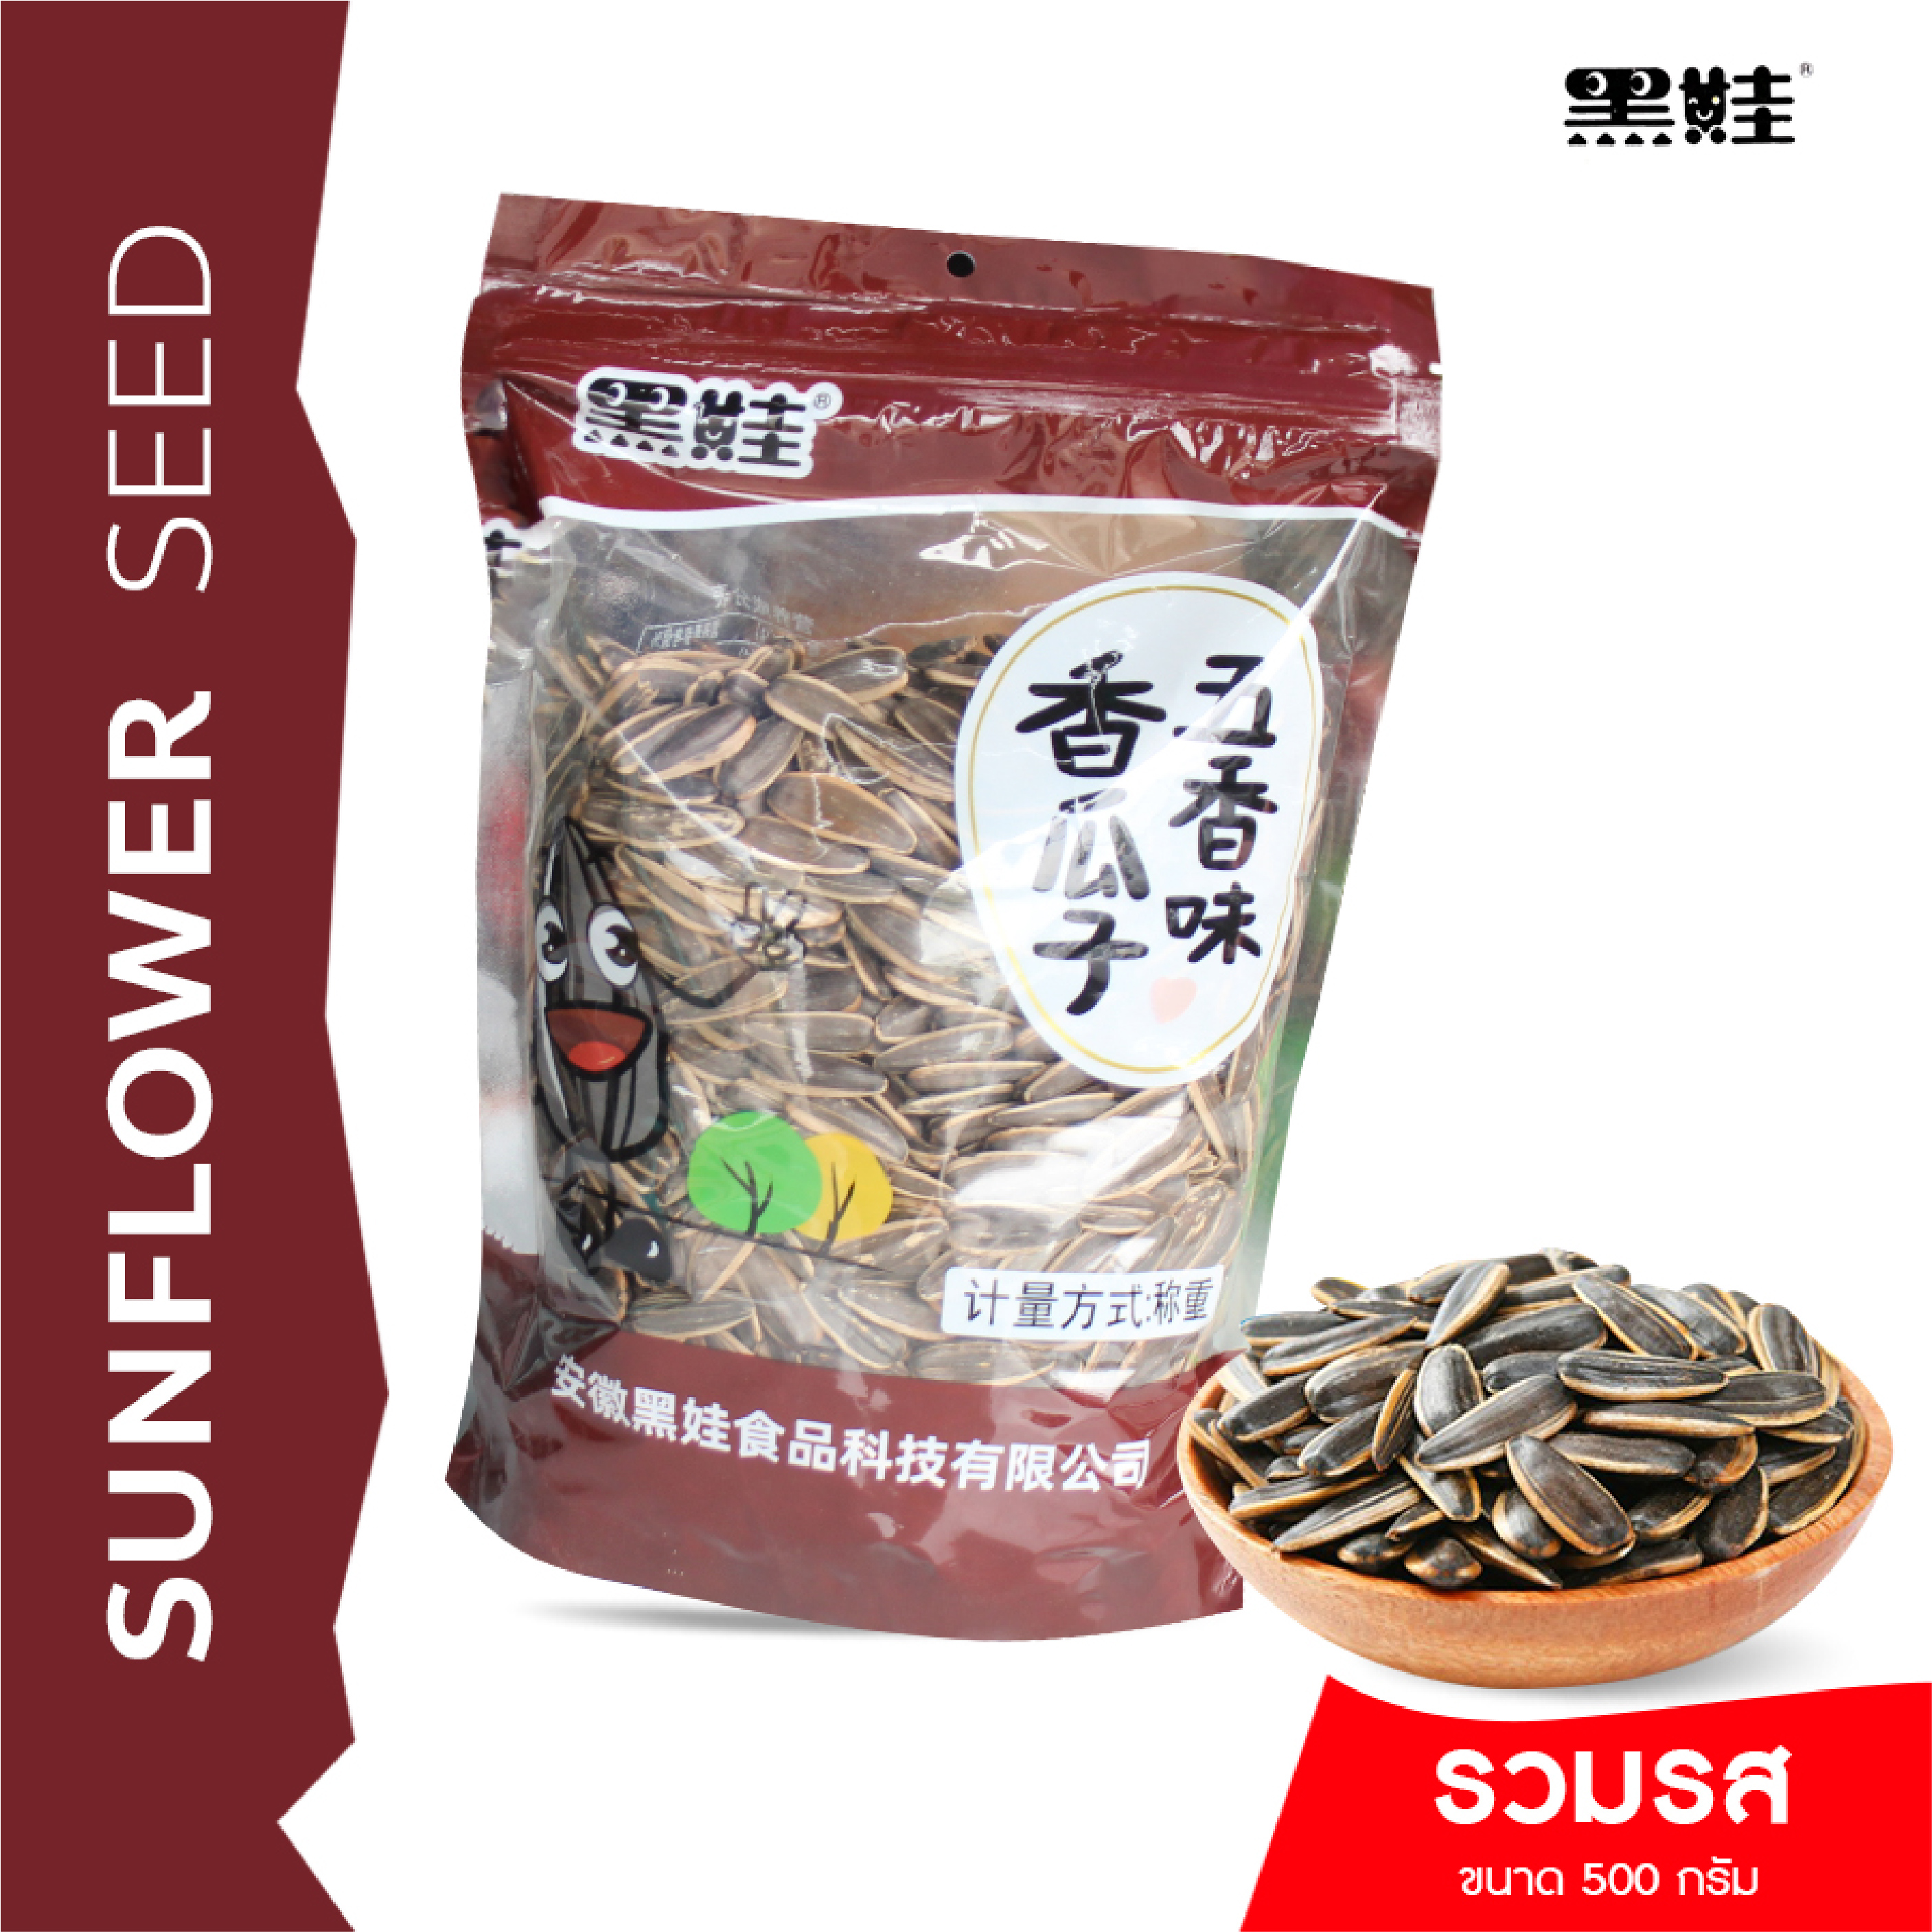 HEIWA Sunflower Seed : เมล็ดทานตะวัน ขนาด 500 กรัม ไฉไล อินเตอร์เทรด บริษัทนำเข้าขนม